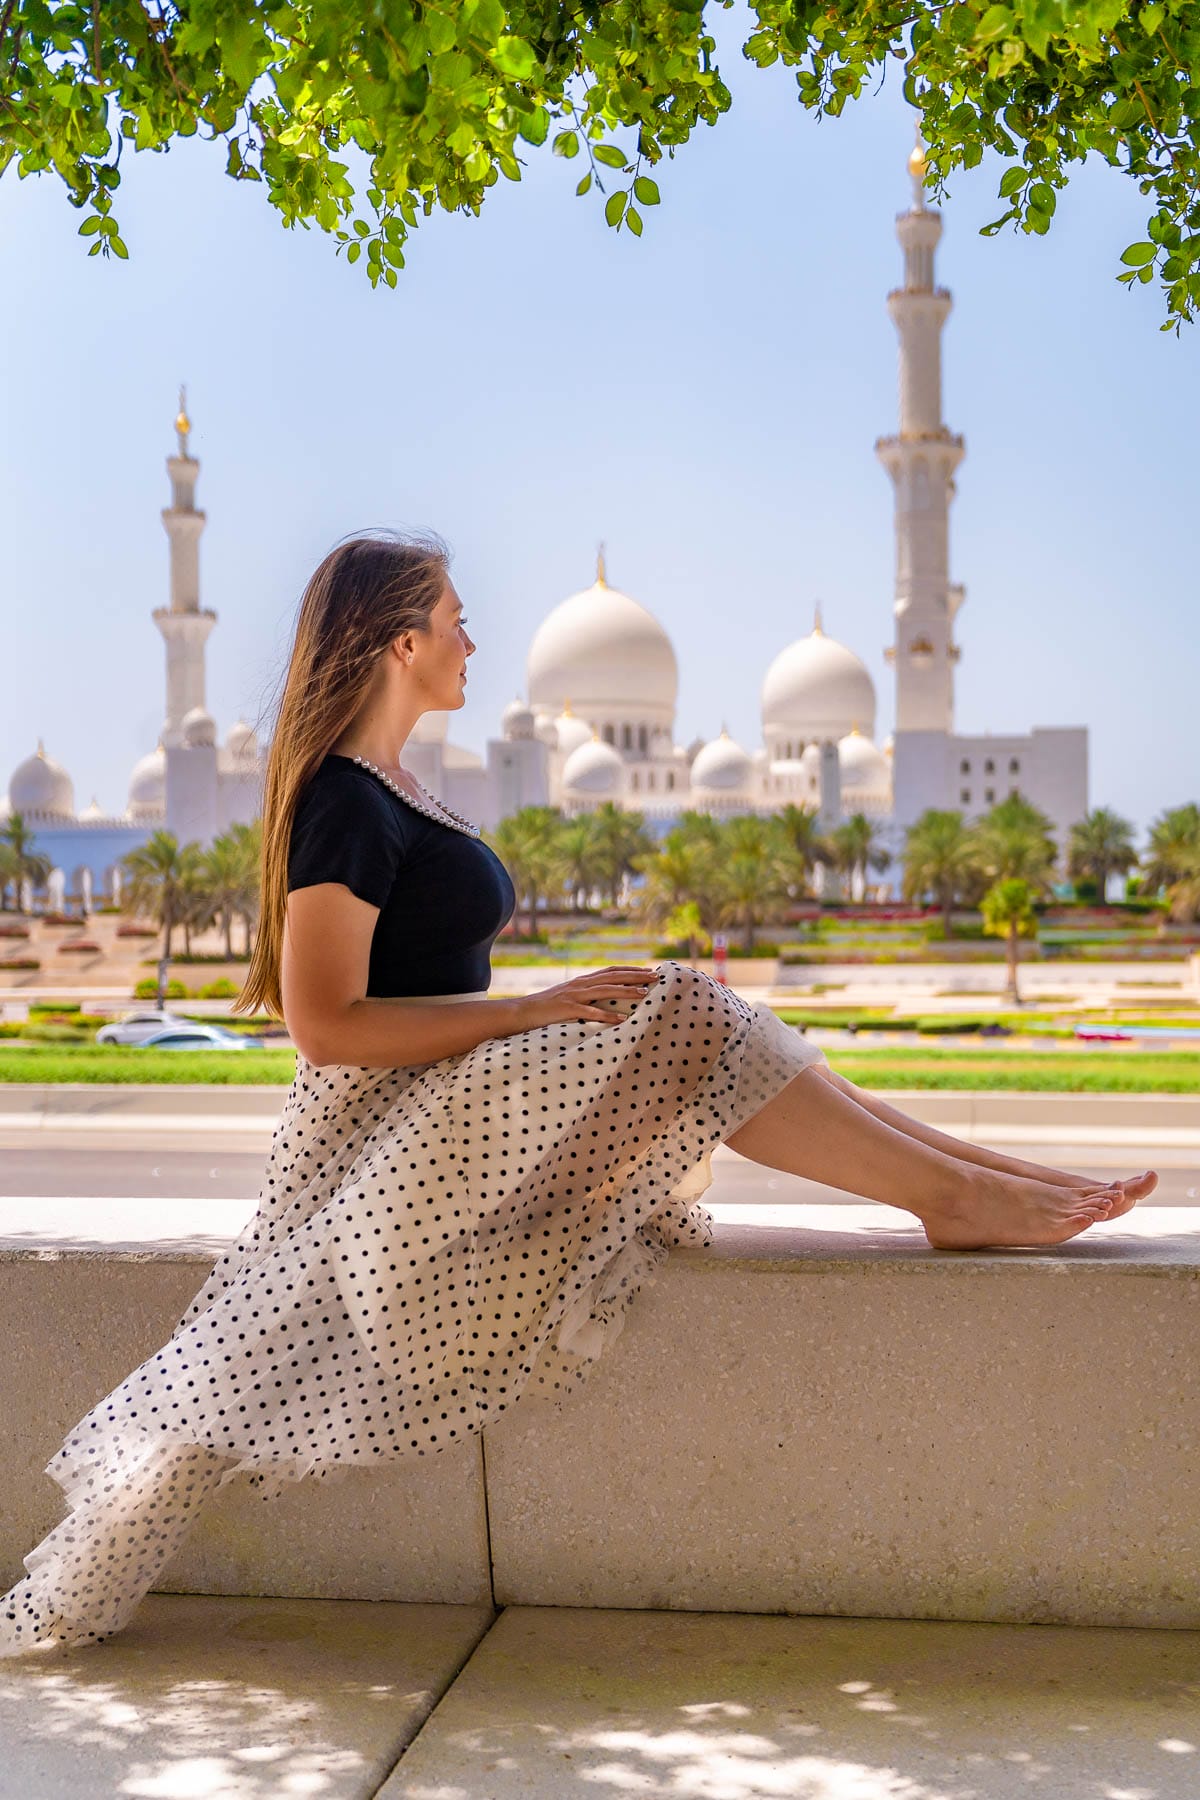 Girl at Wahat al Karama overlooking the Grand Mosque in Abu Dhabi